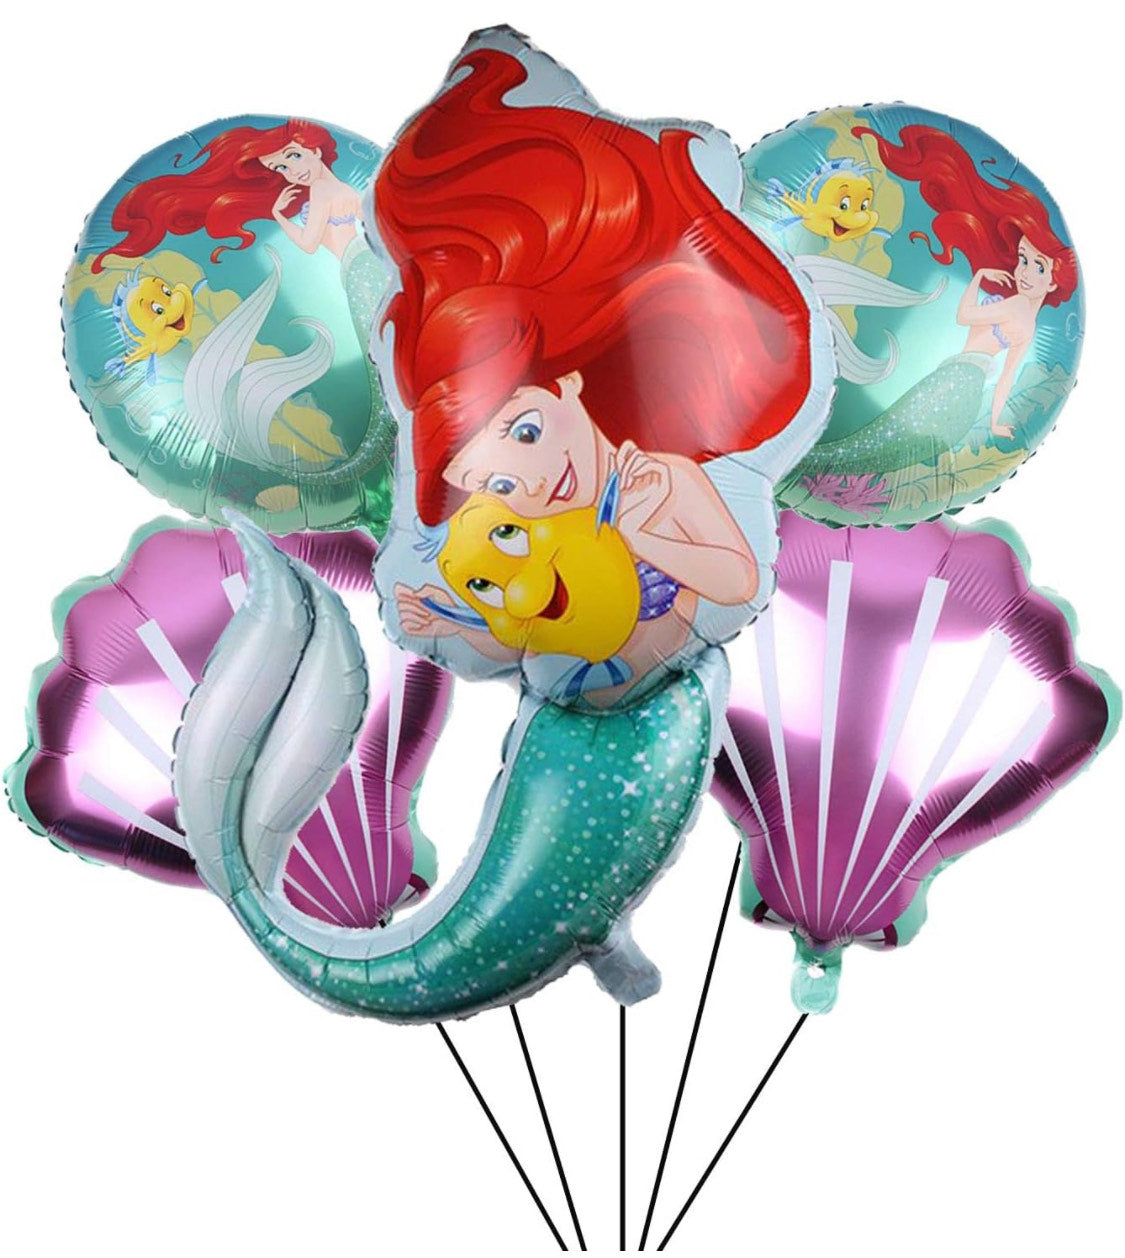 Compositon "Mermaid Ariel"